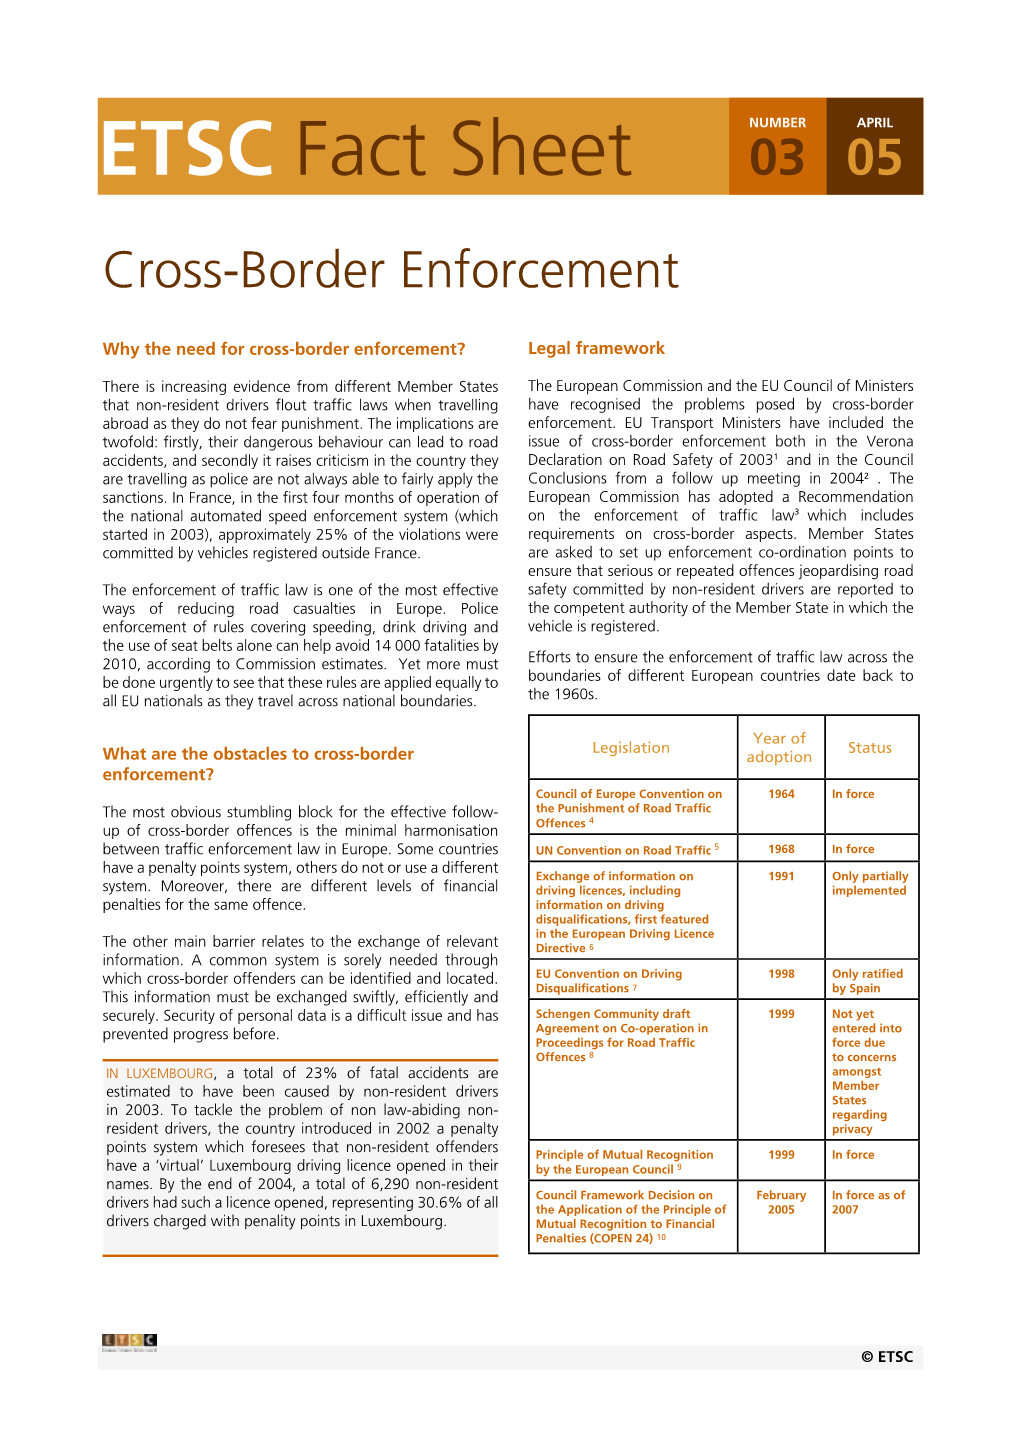 Cross-Border Enforcement